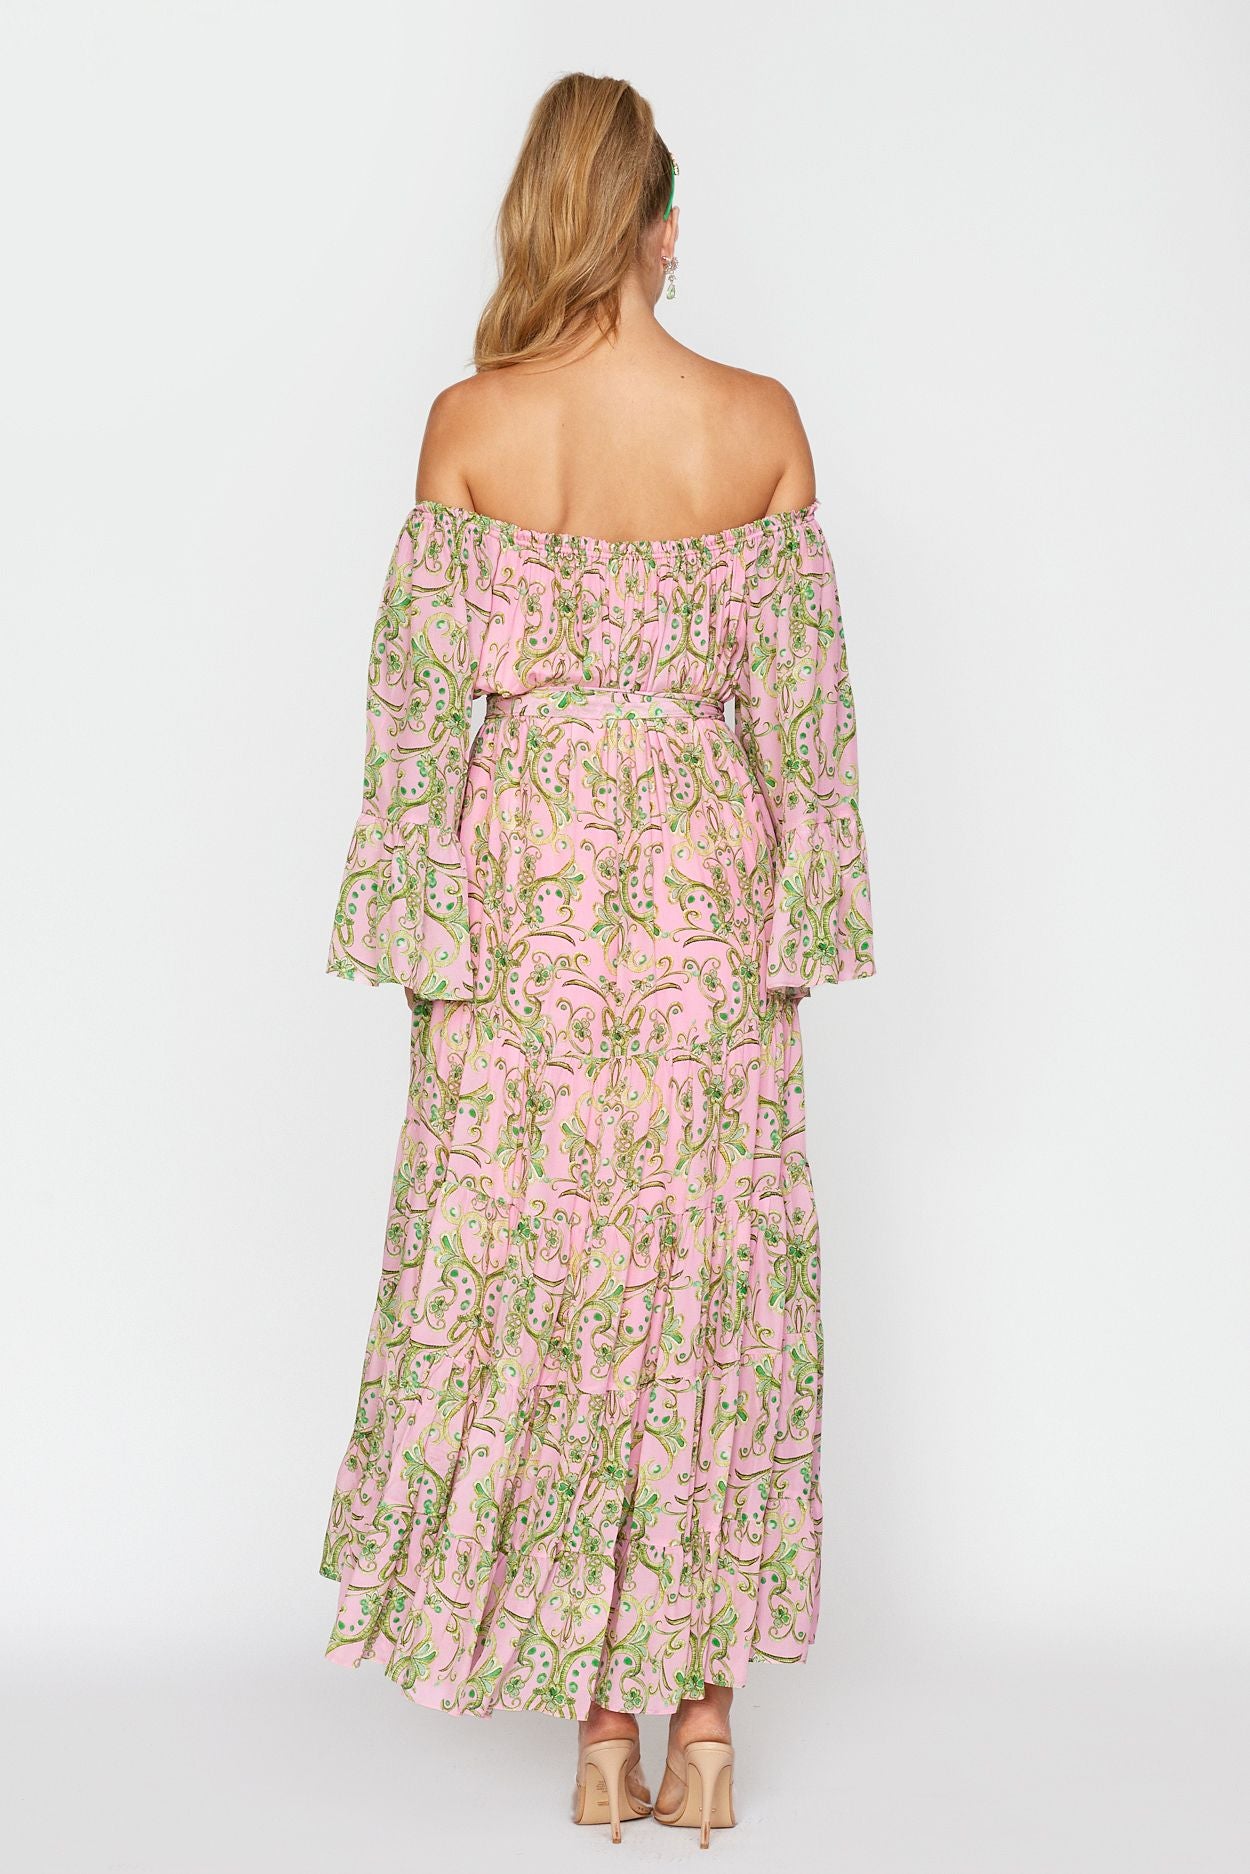 Fleur-De-Lis Gypsy Dress